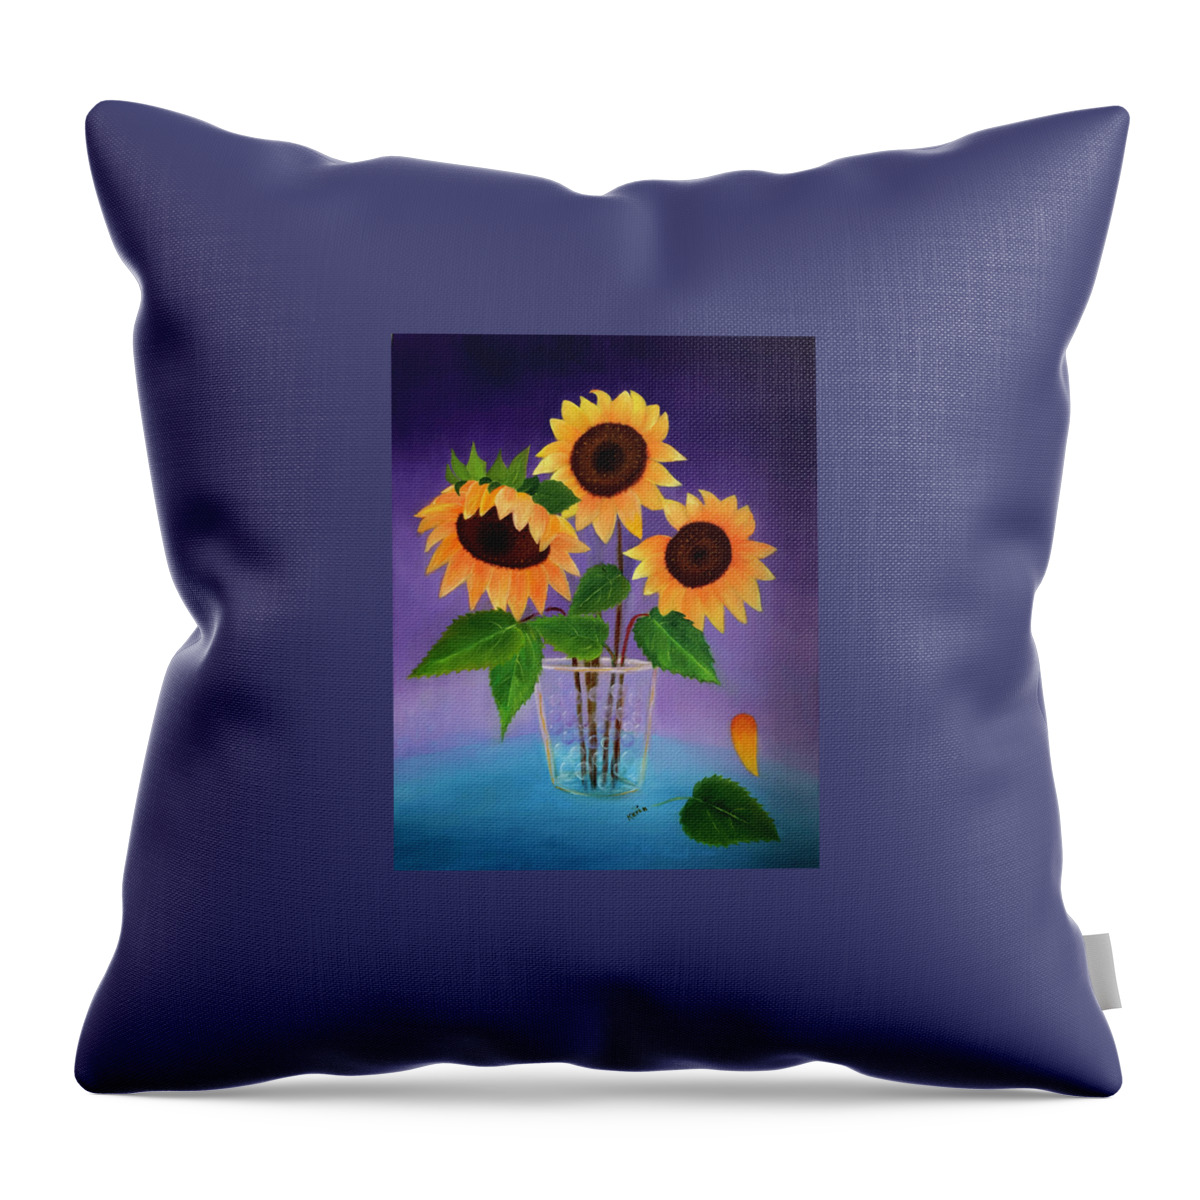 Sunflower Throw Pillow featuring the painting Sunflowers by Karin Eisermann